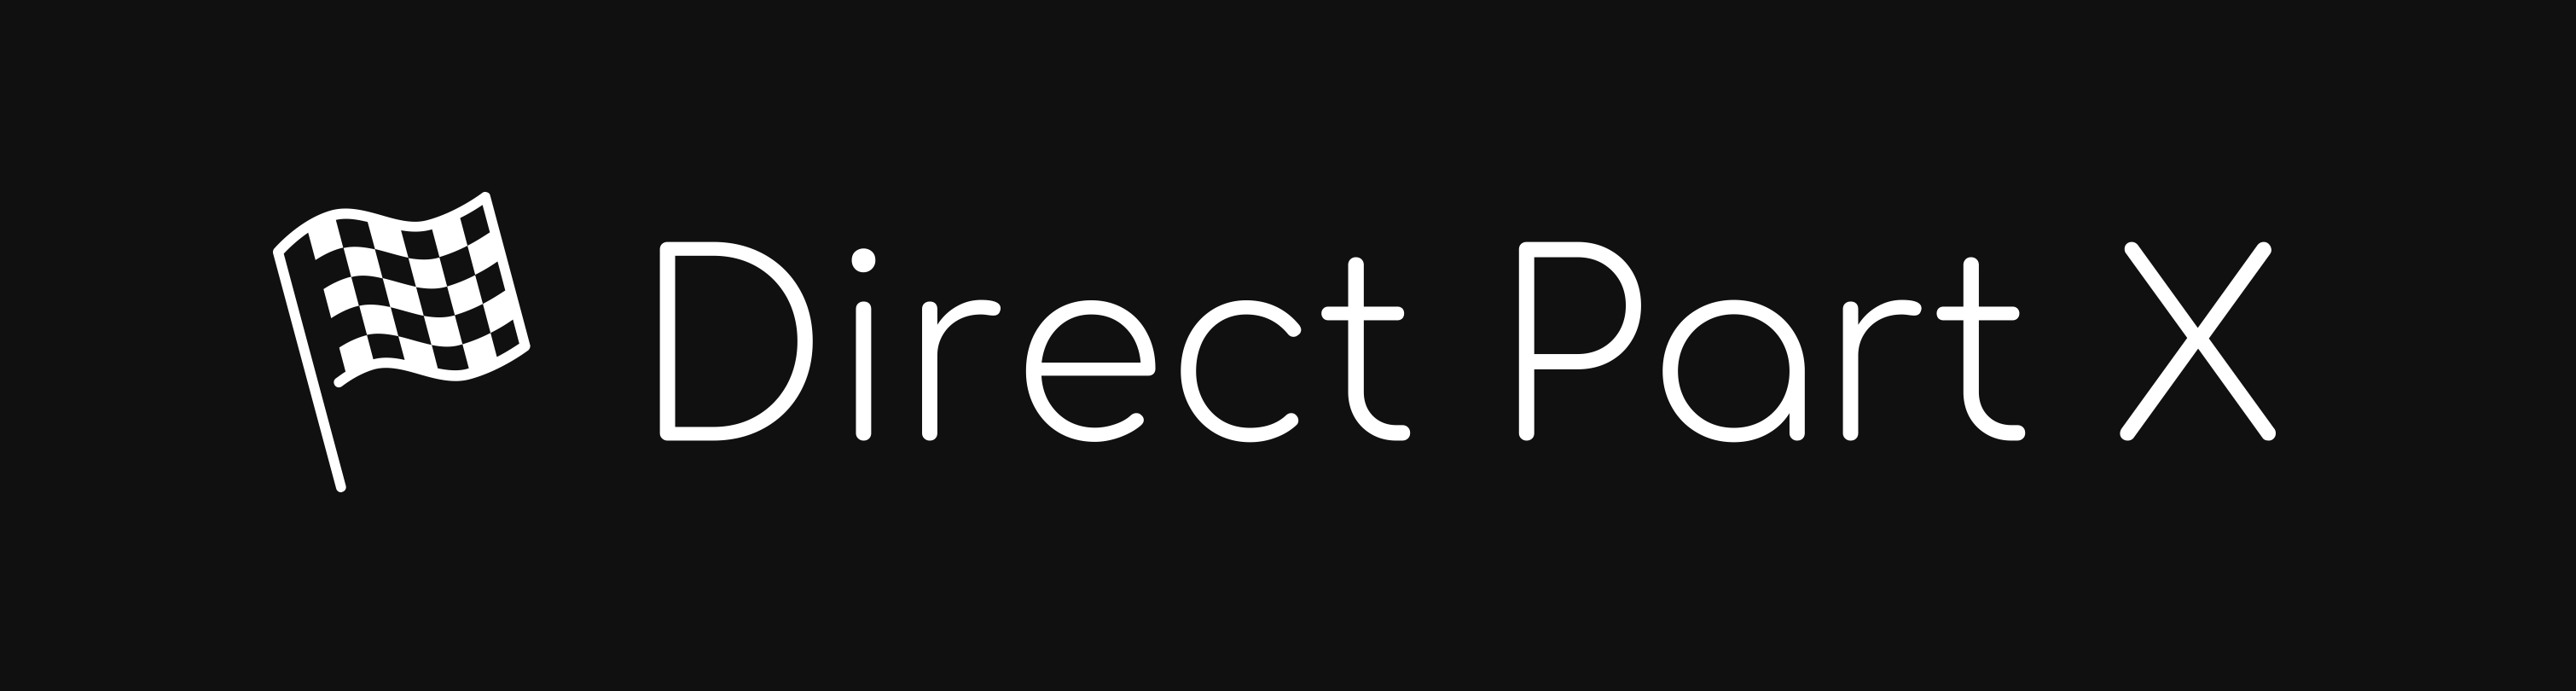 Direct Part X logo